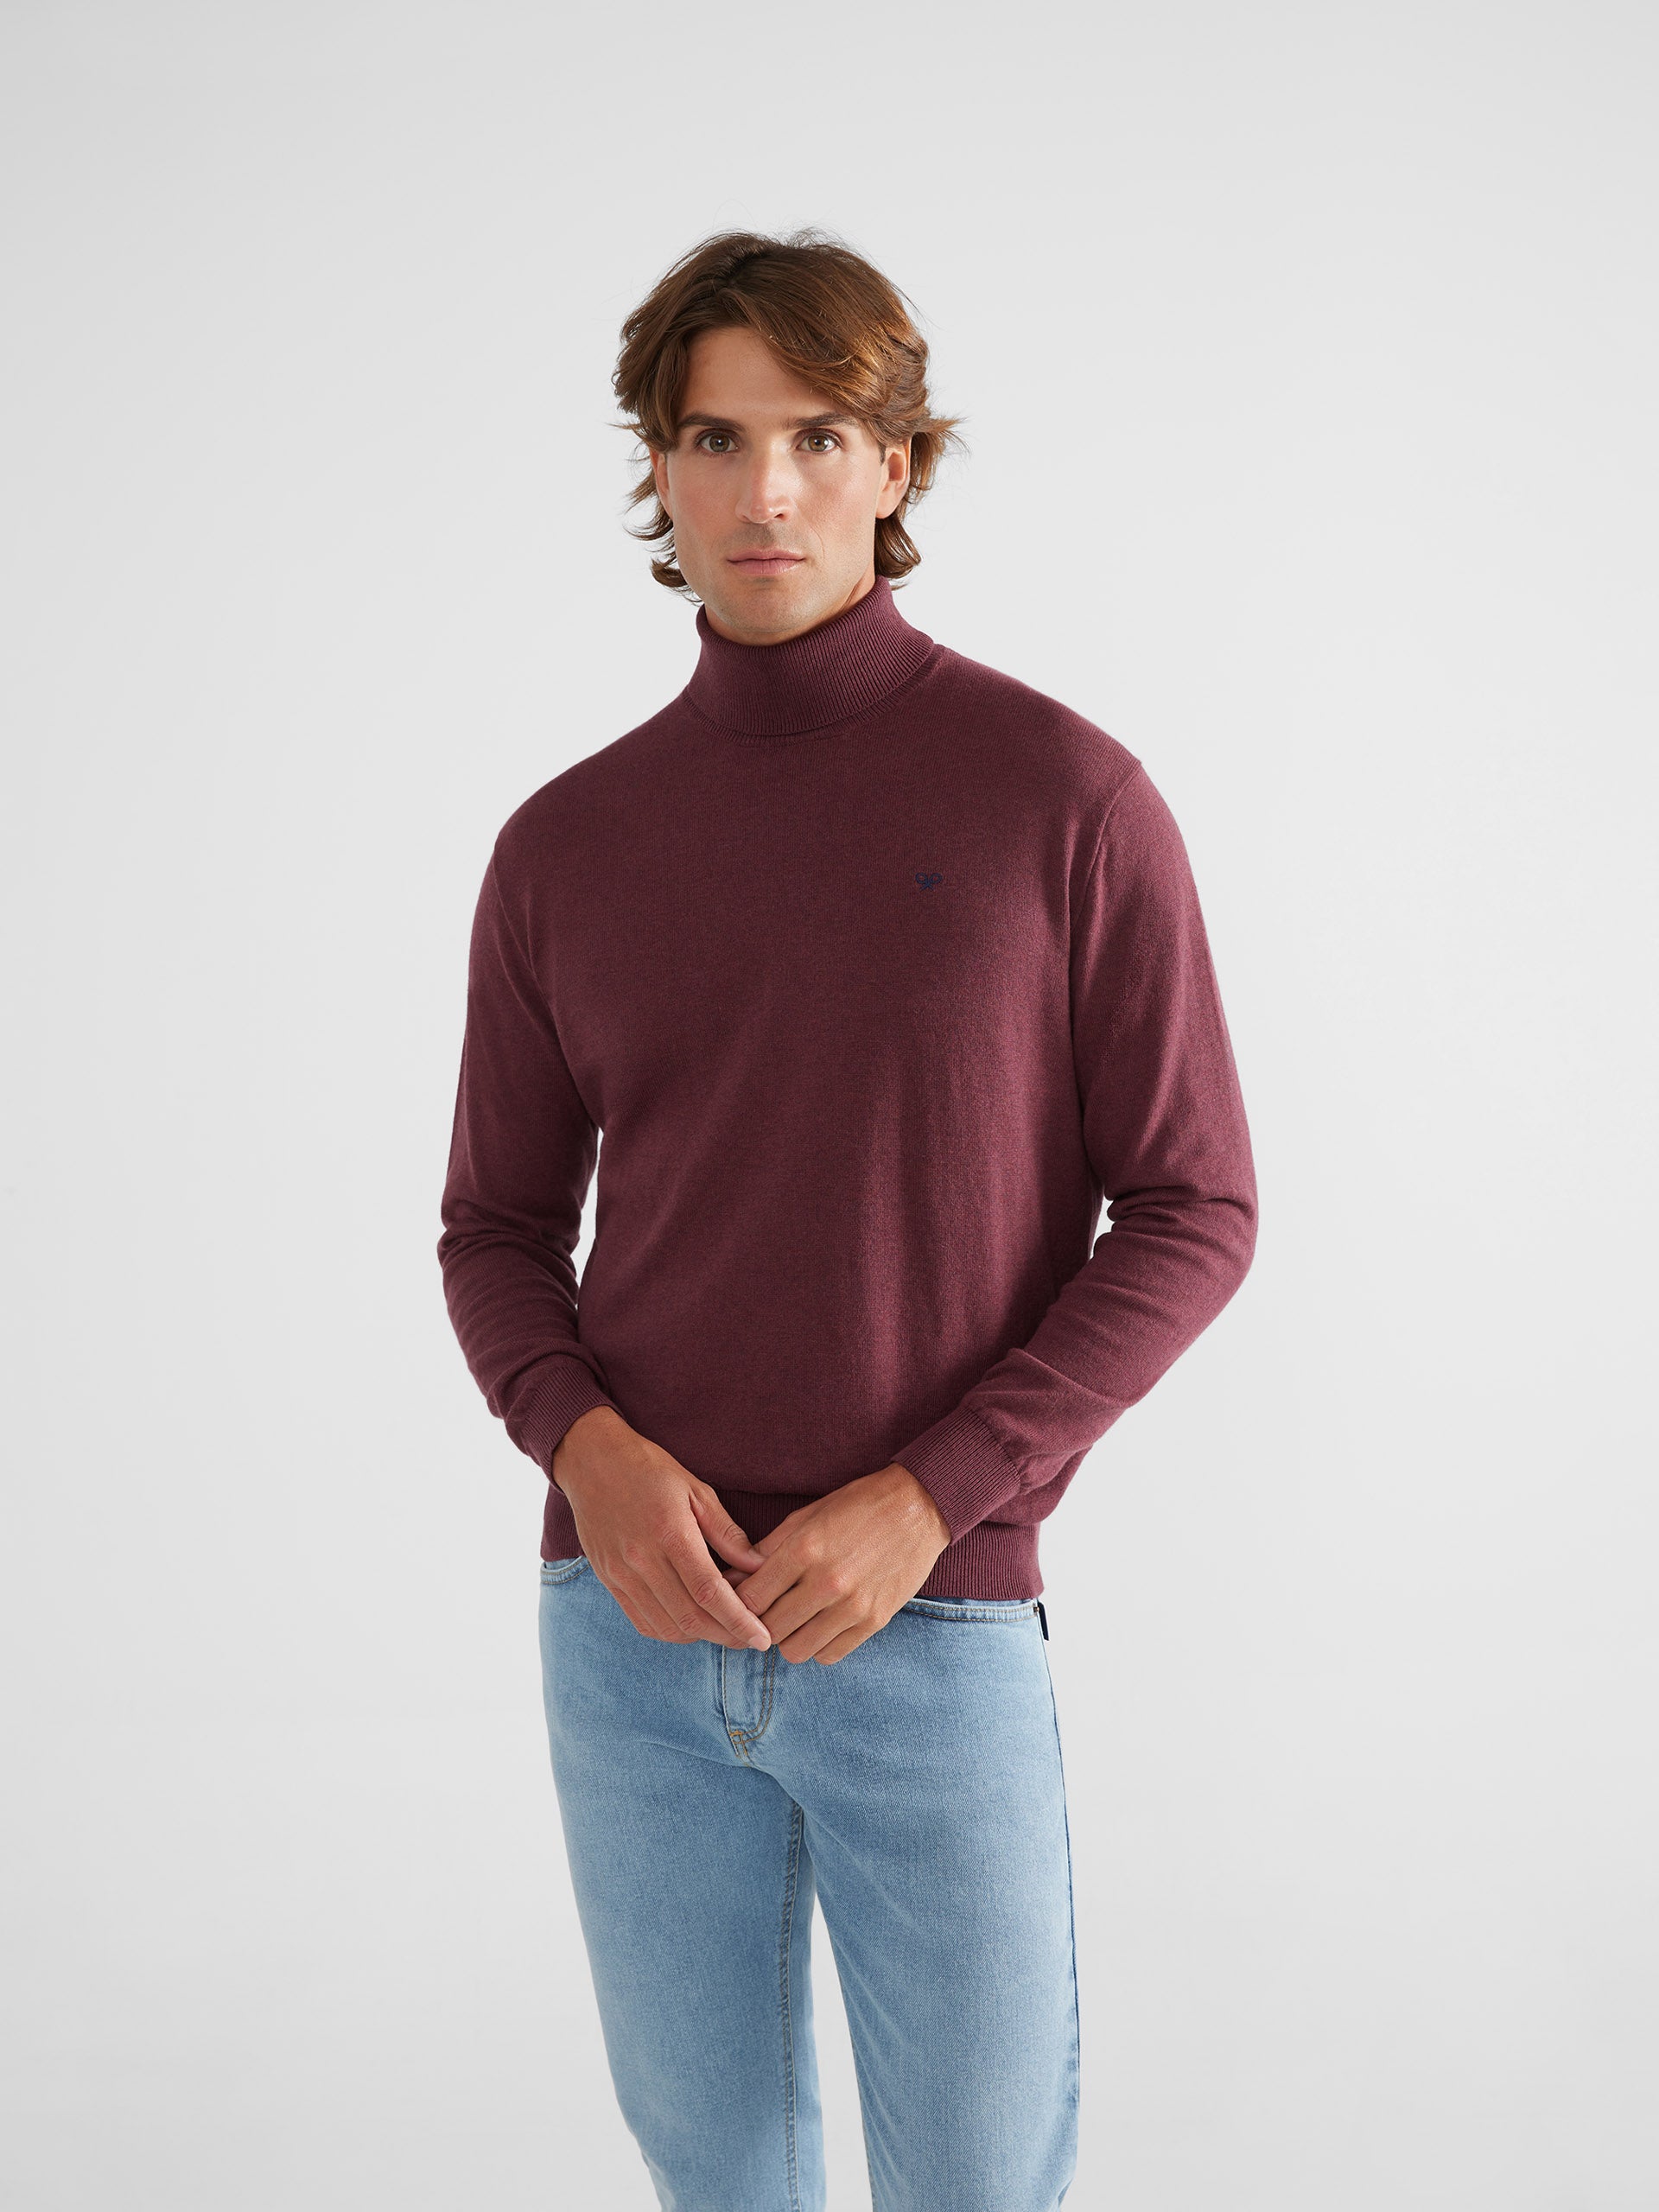 Plain burgundy turtleneck sweater